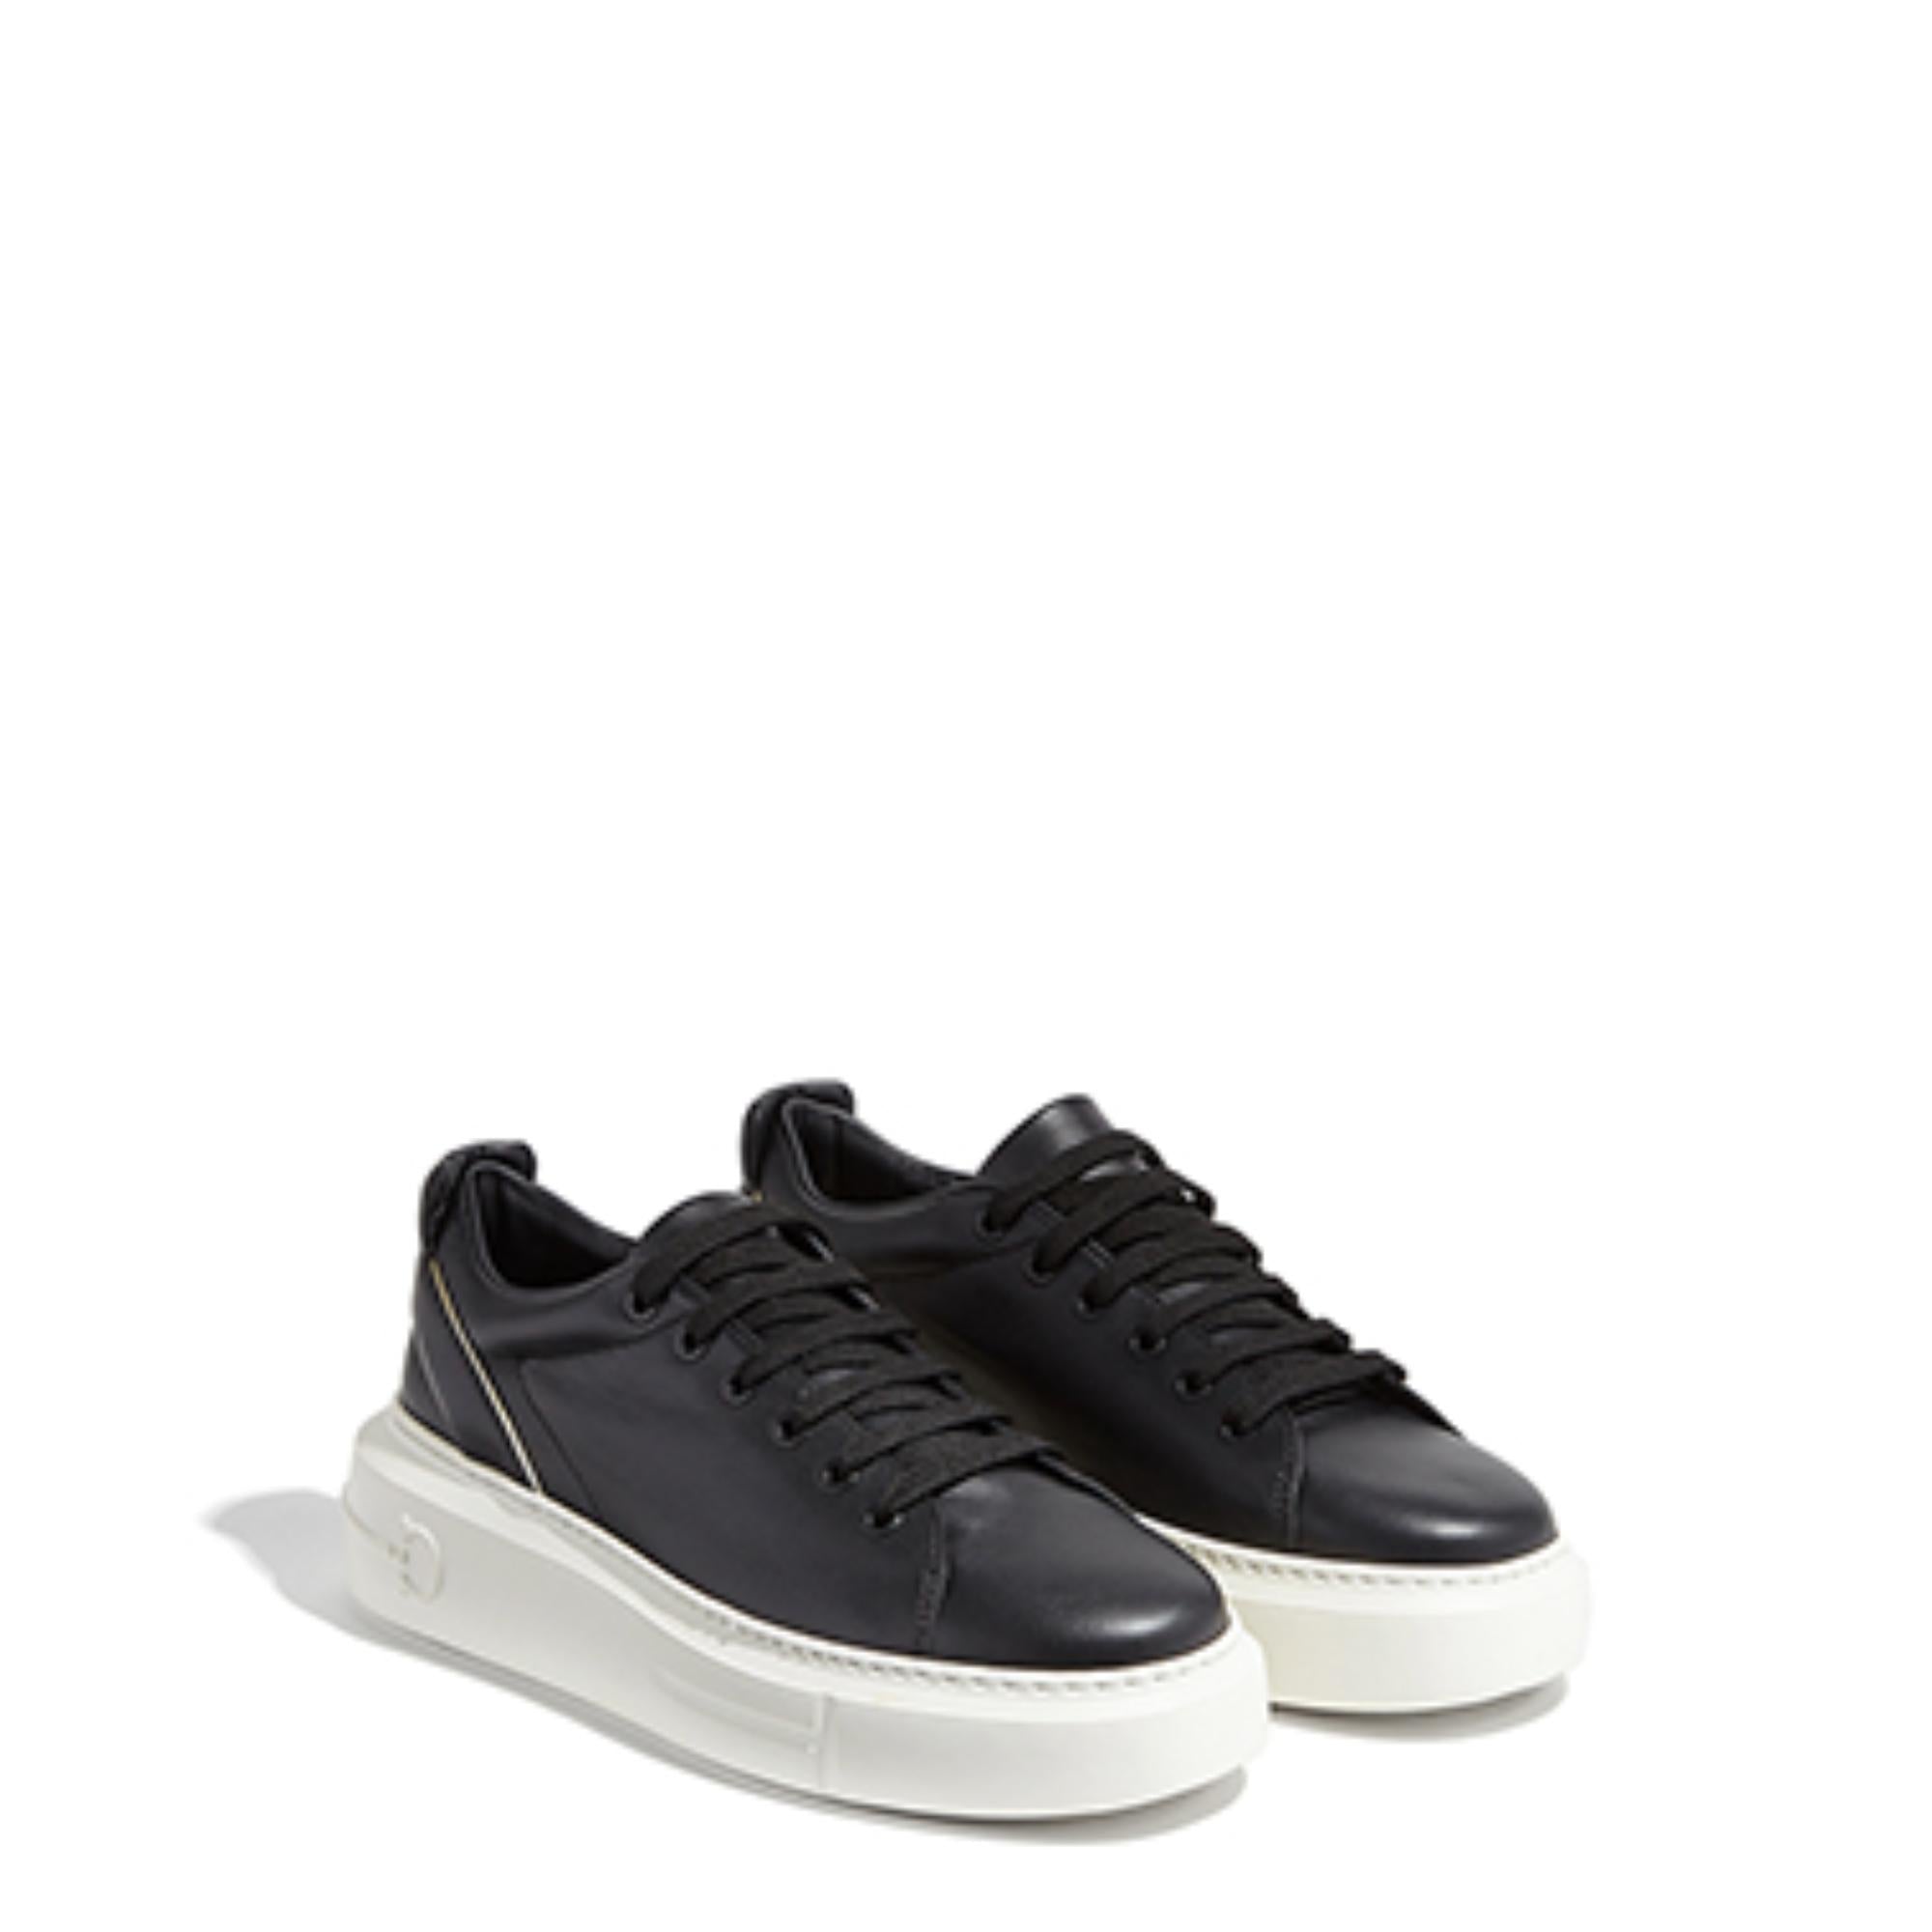 Gancini Sneaker in Calf Leather - Black/Vanilla